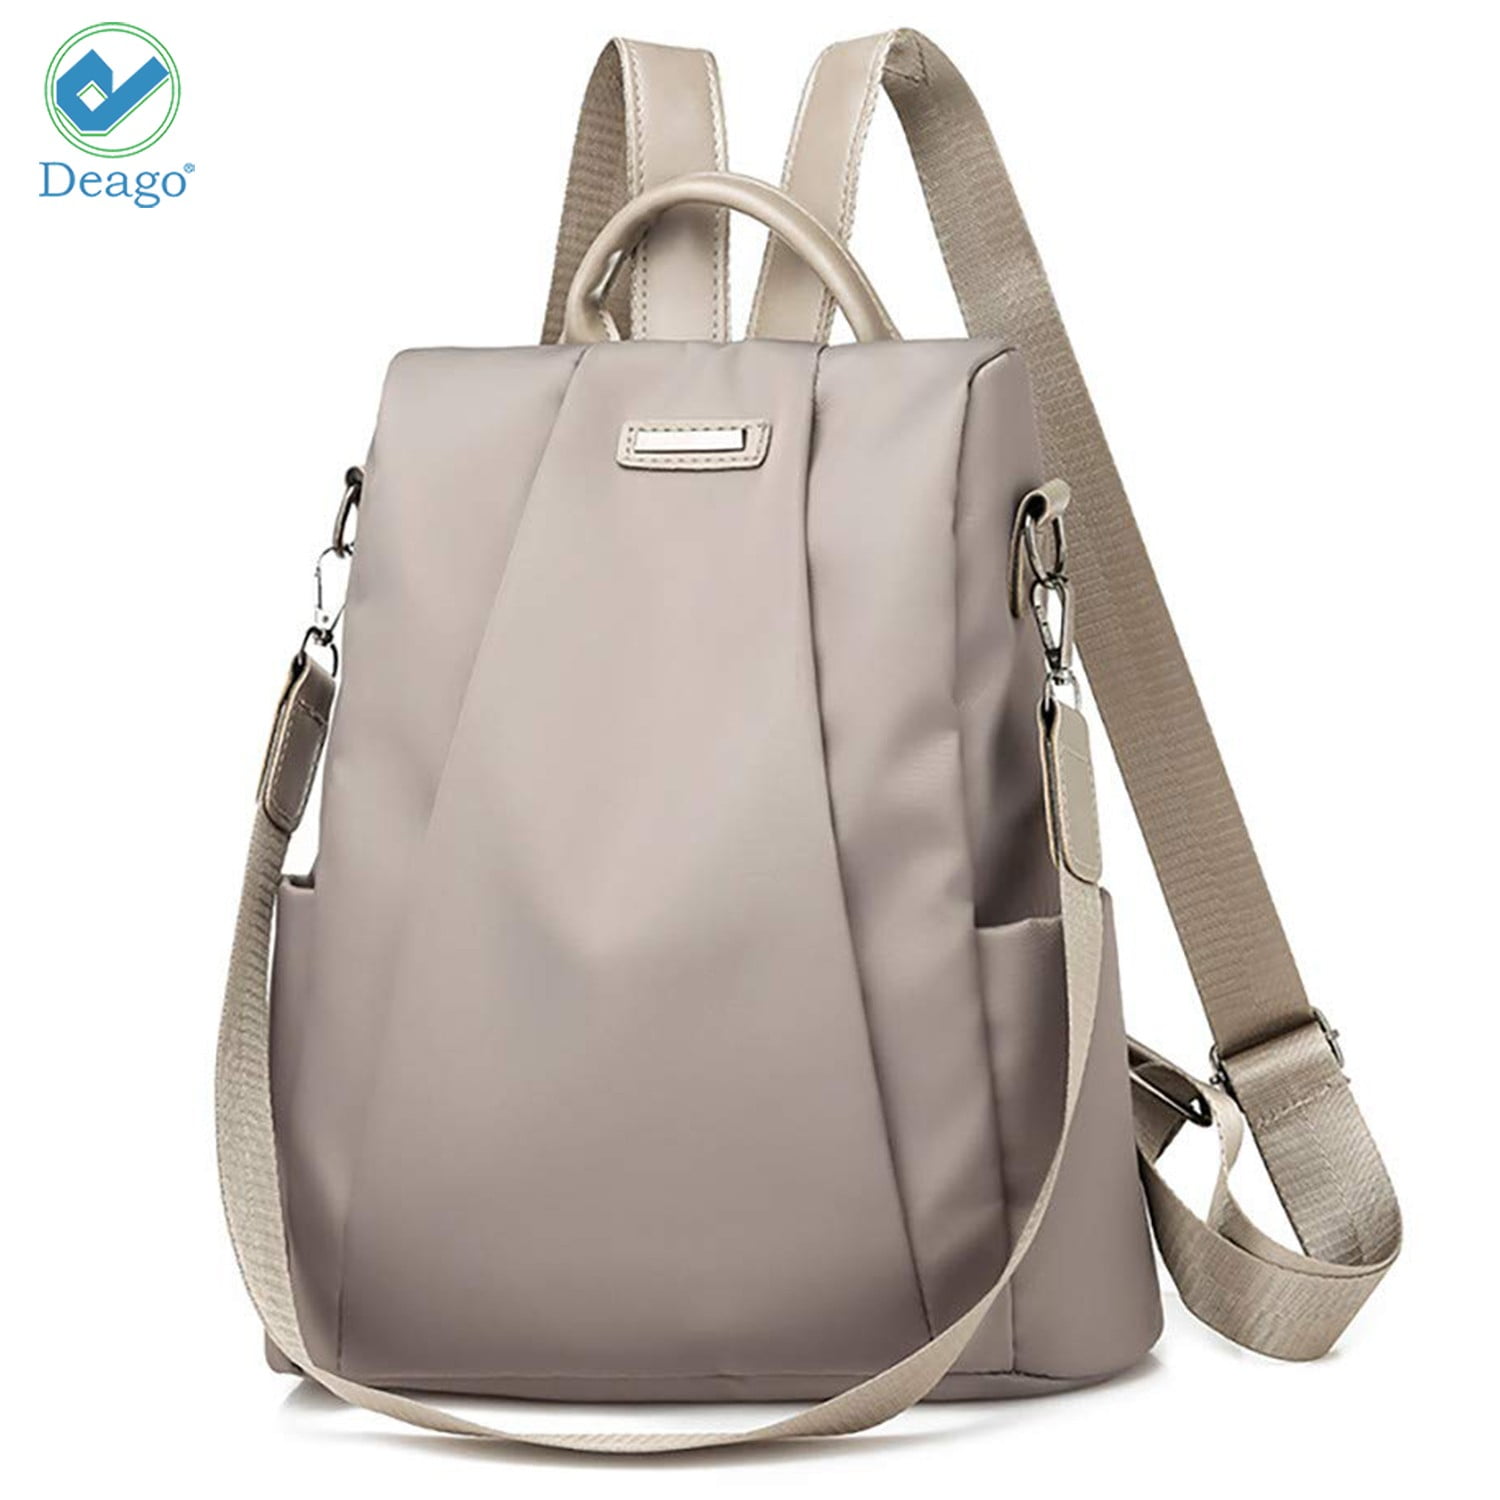 KEAKIA Women PU Leather Leaves Pattern Backpack Purse Travel School Shoulder Bag Casual Daypack 